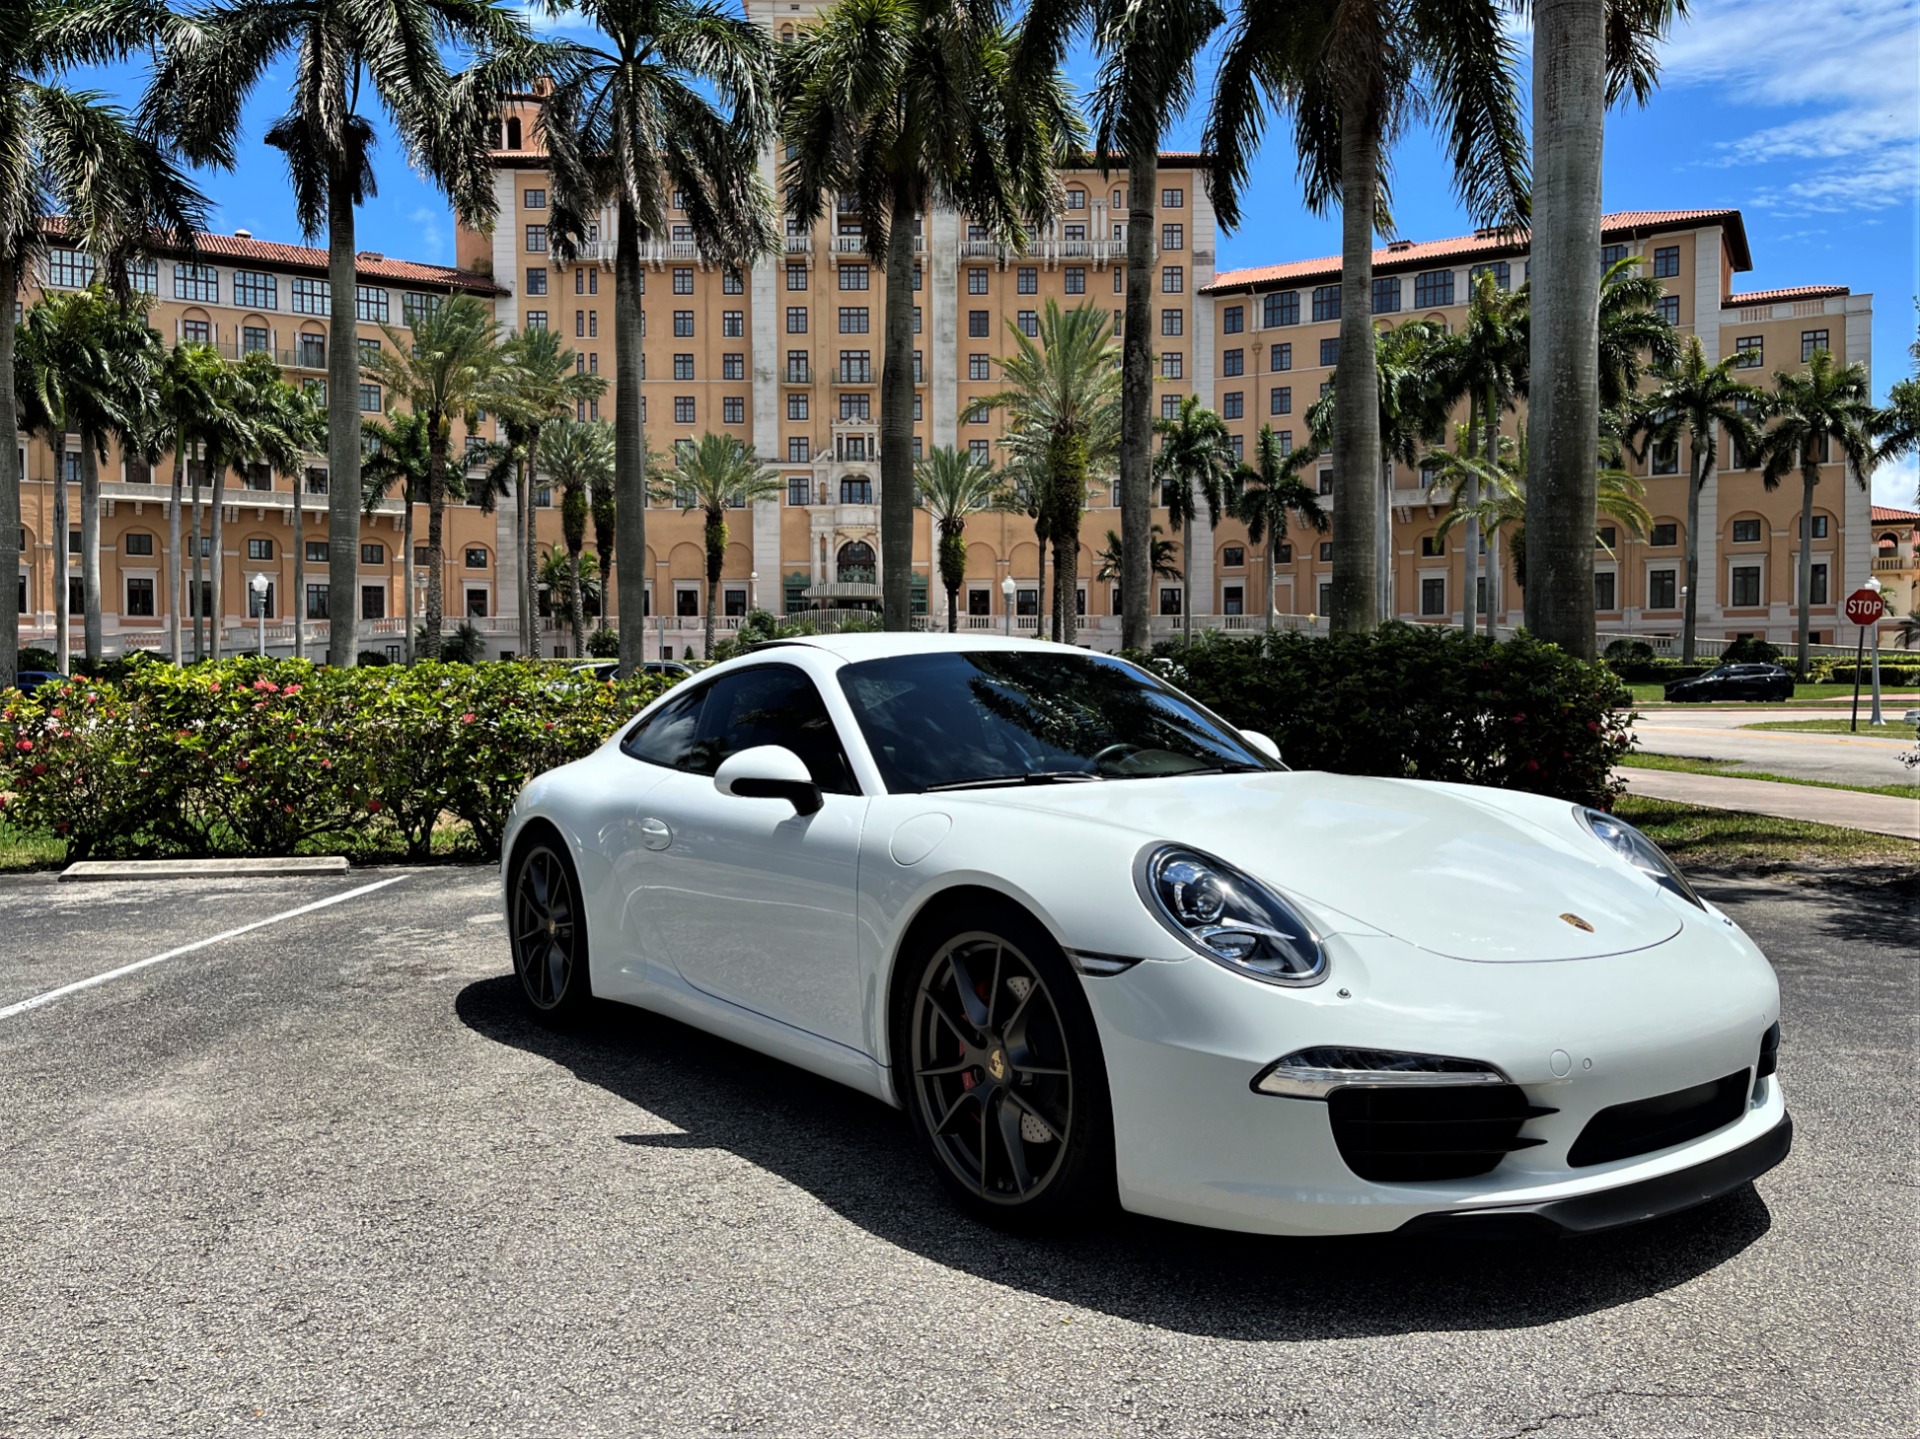 Used 2013 Porsche 911 Carrera S for sale $93,850 at The Gables Sports Cars in Miami FL 33146 2